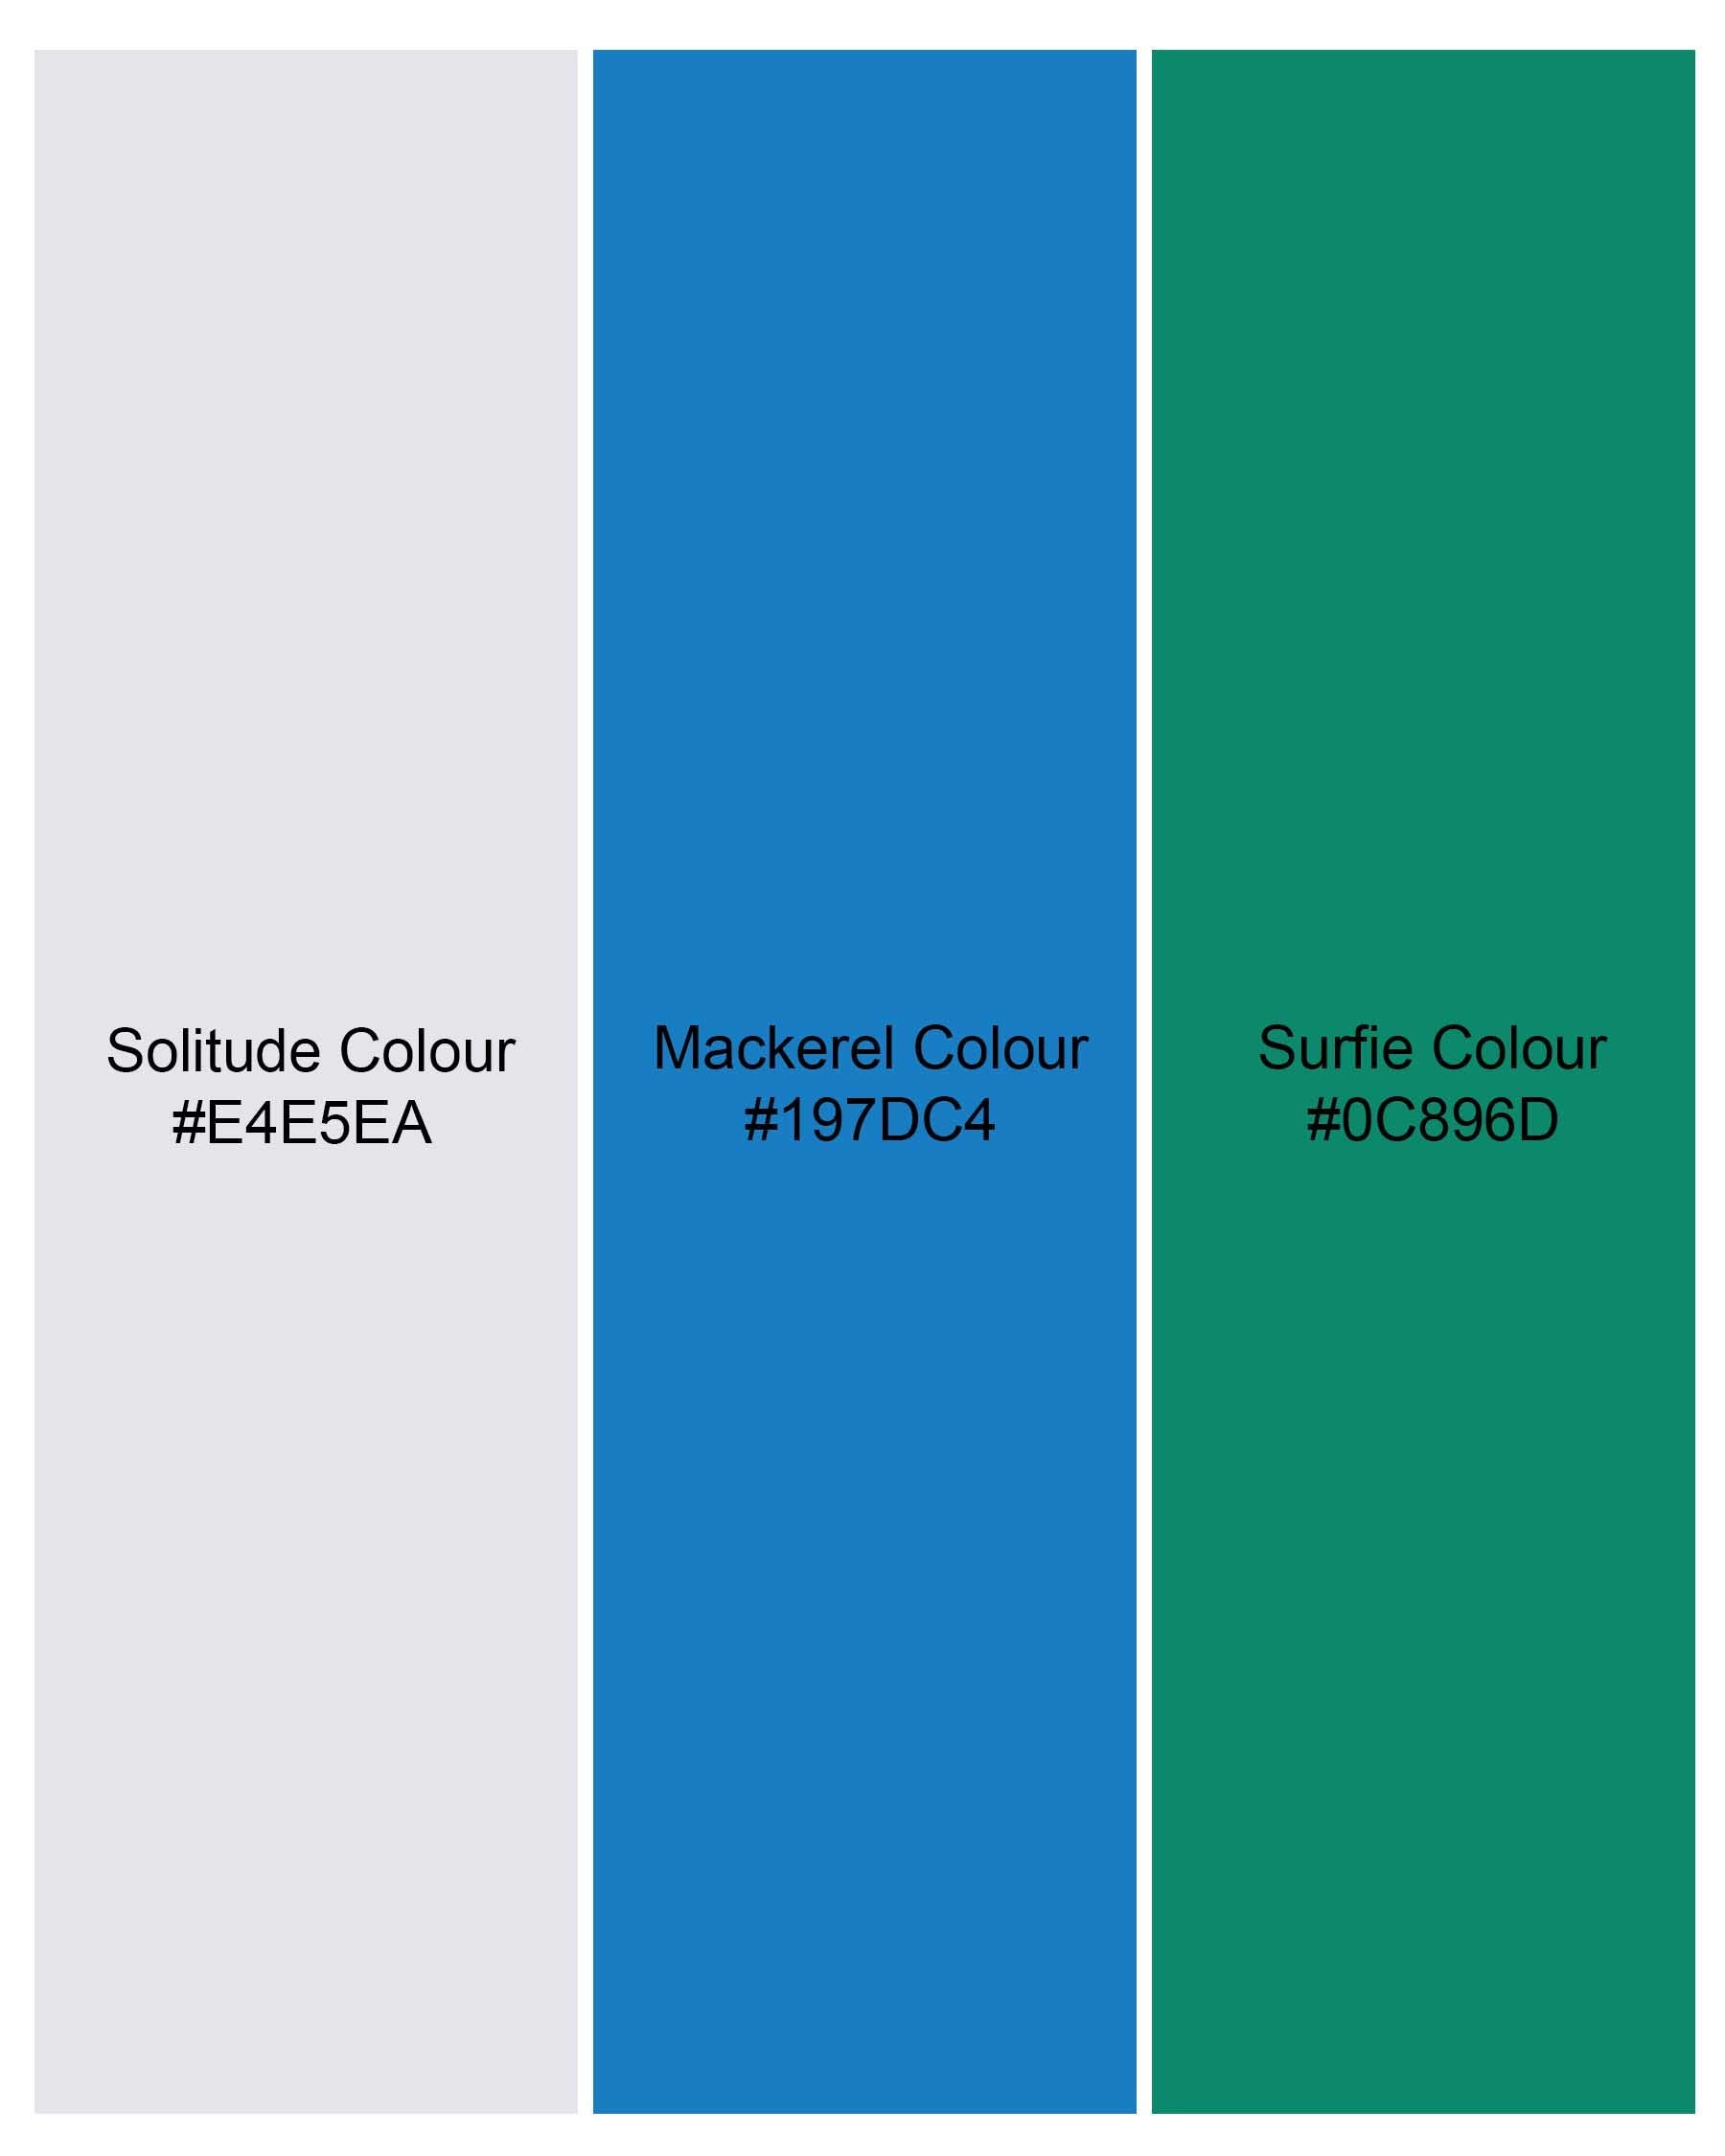 Mackerel Blue and Surfie Green Checkered Herringbone Premium Cotton Shirt 7904 -38,7904 -H-38,7904 -39,7904 -H-39,7904 -40,7904 -H-40,7904 -42,7904 -H-42,7904 -44,7904 -H-44,7904 -46,7904 -H-46,7904 -48,7904 -H-48,7904 -50,7904 -H-50,7904 -52,7904 -H-52